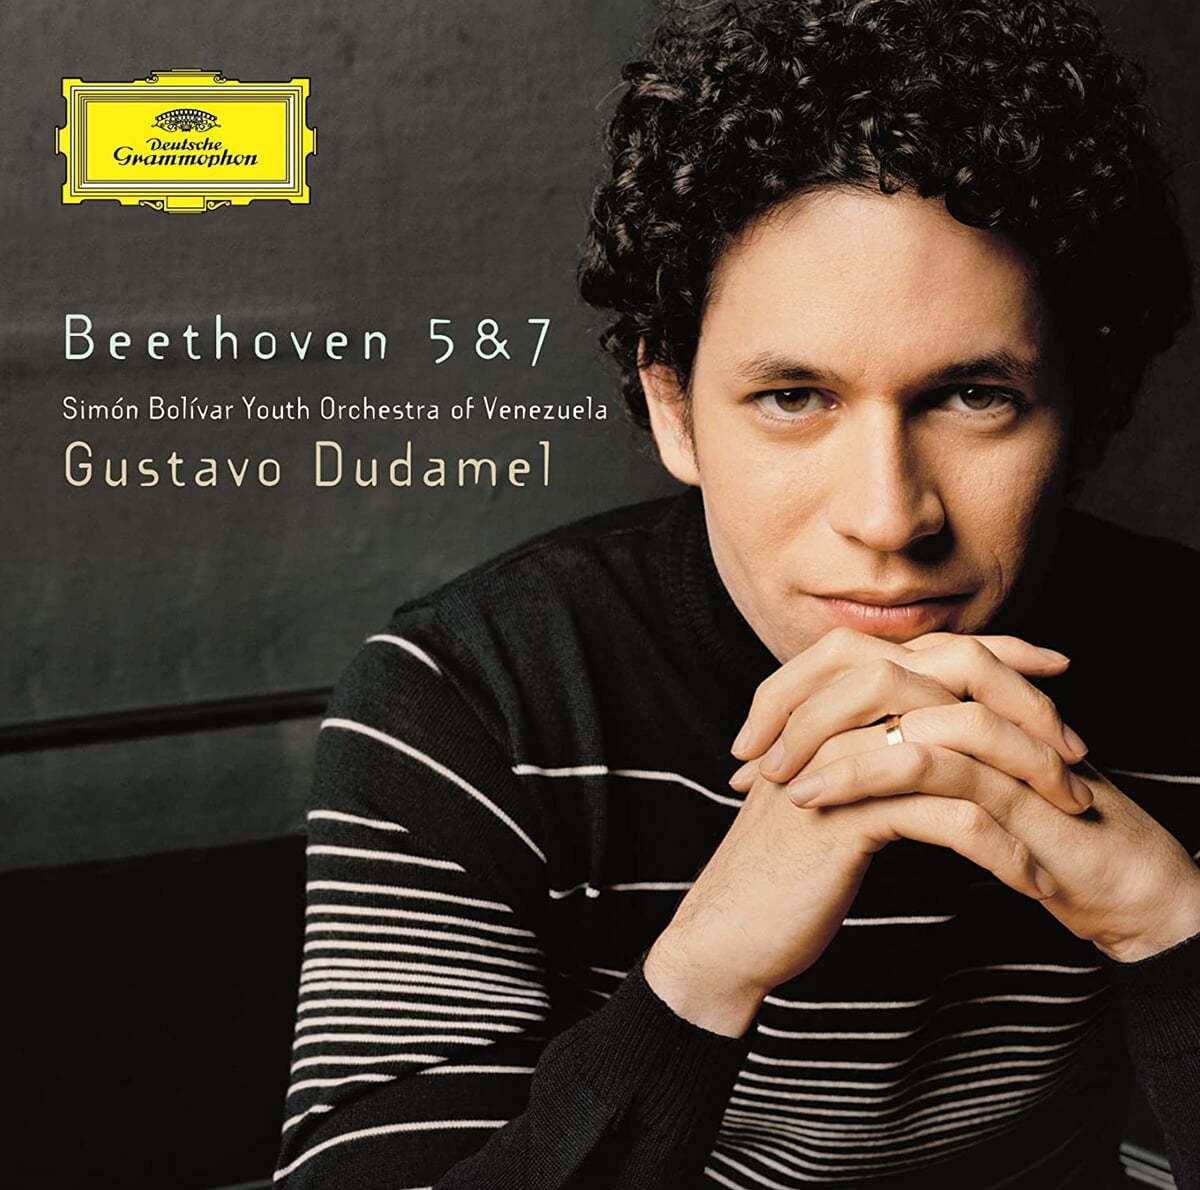 Gustavo Dudamel 베토벤: 교향곡 5번, 7번 (Beethoven: Symphonies No.5 & 7)